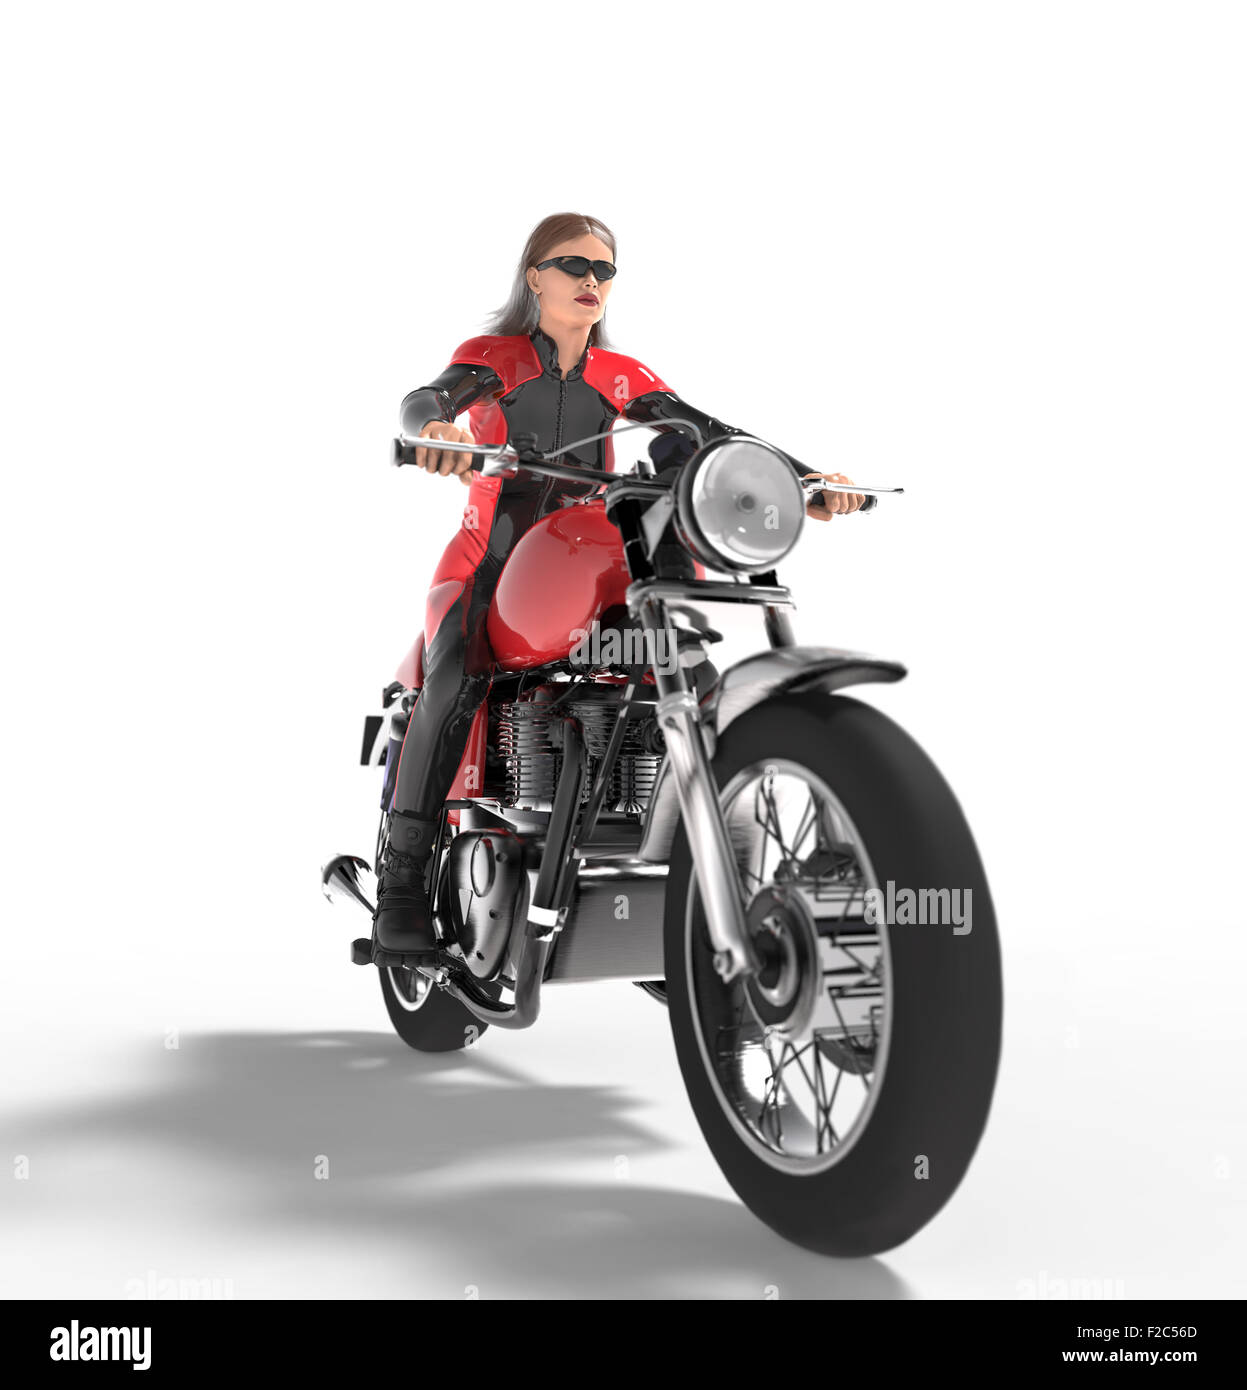 woman riding on motorbike Stock Photo